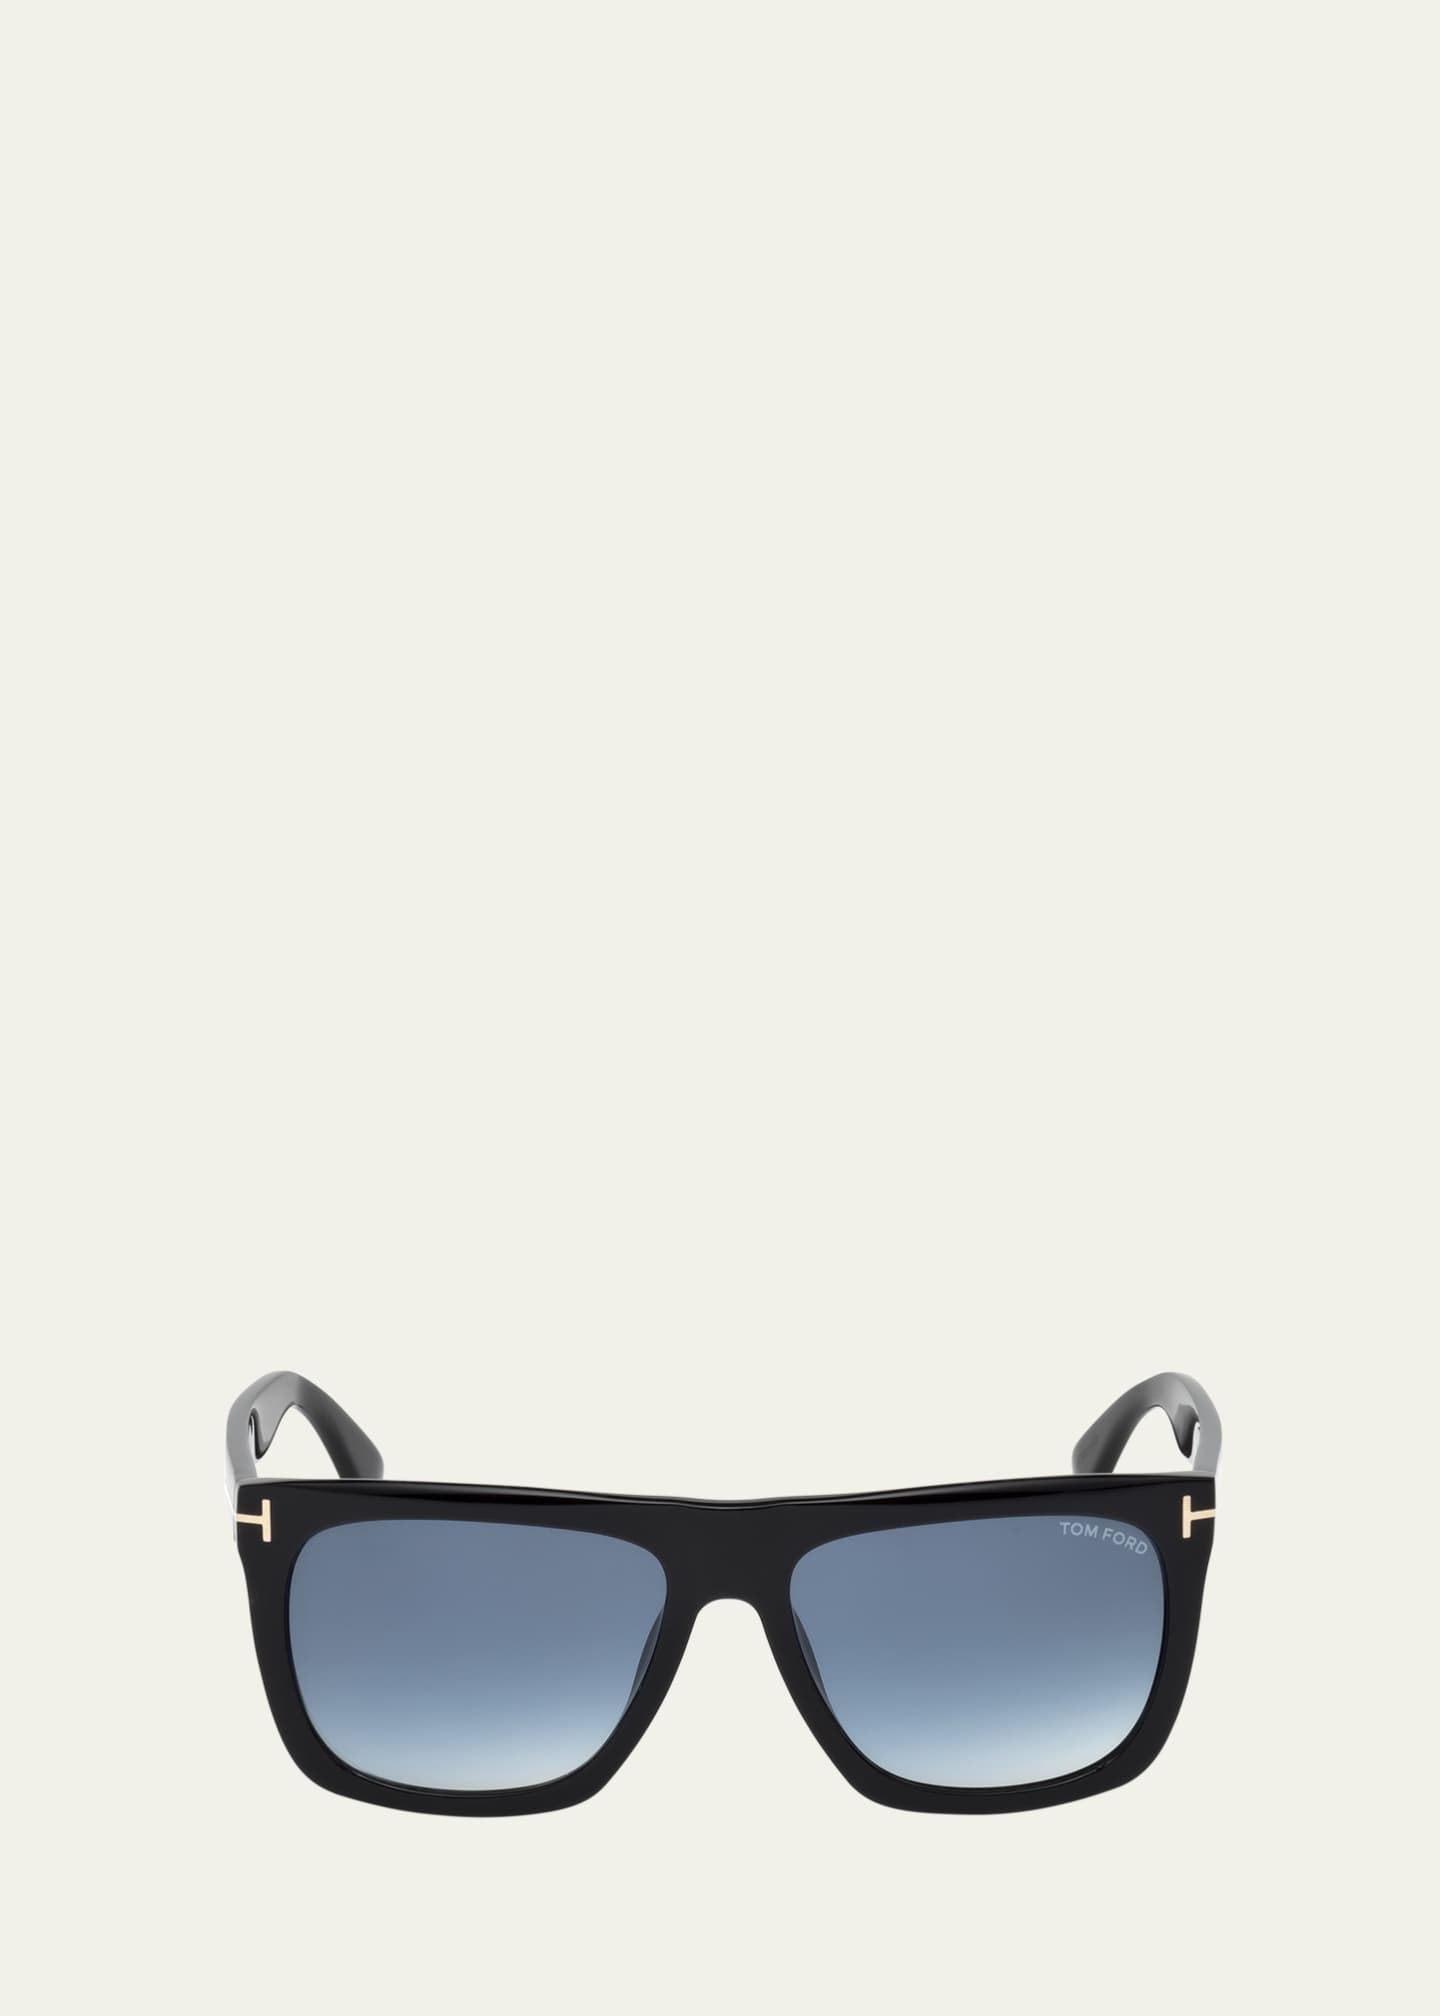 TOM FORD Morgan Thick Square Acetate Sunglasses, Black/Blue - Bergdorf ...